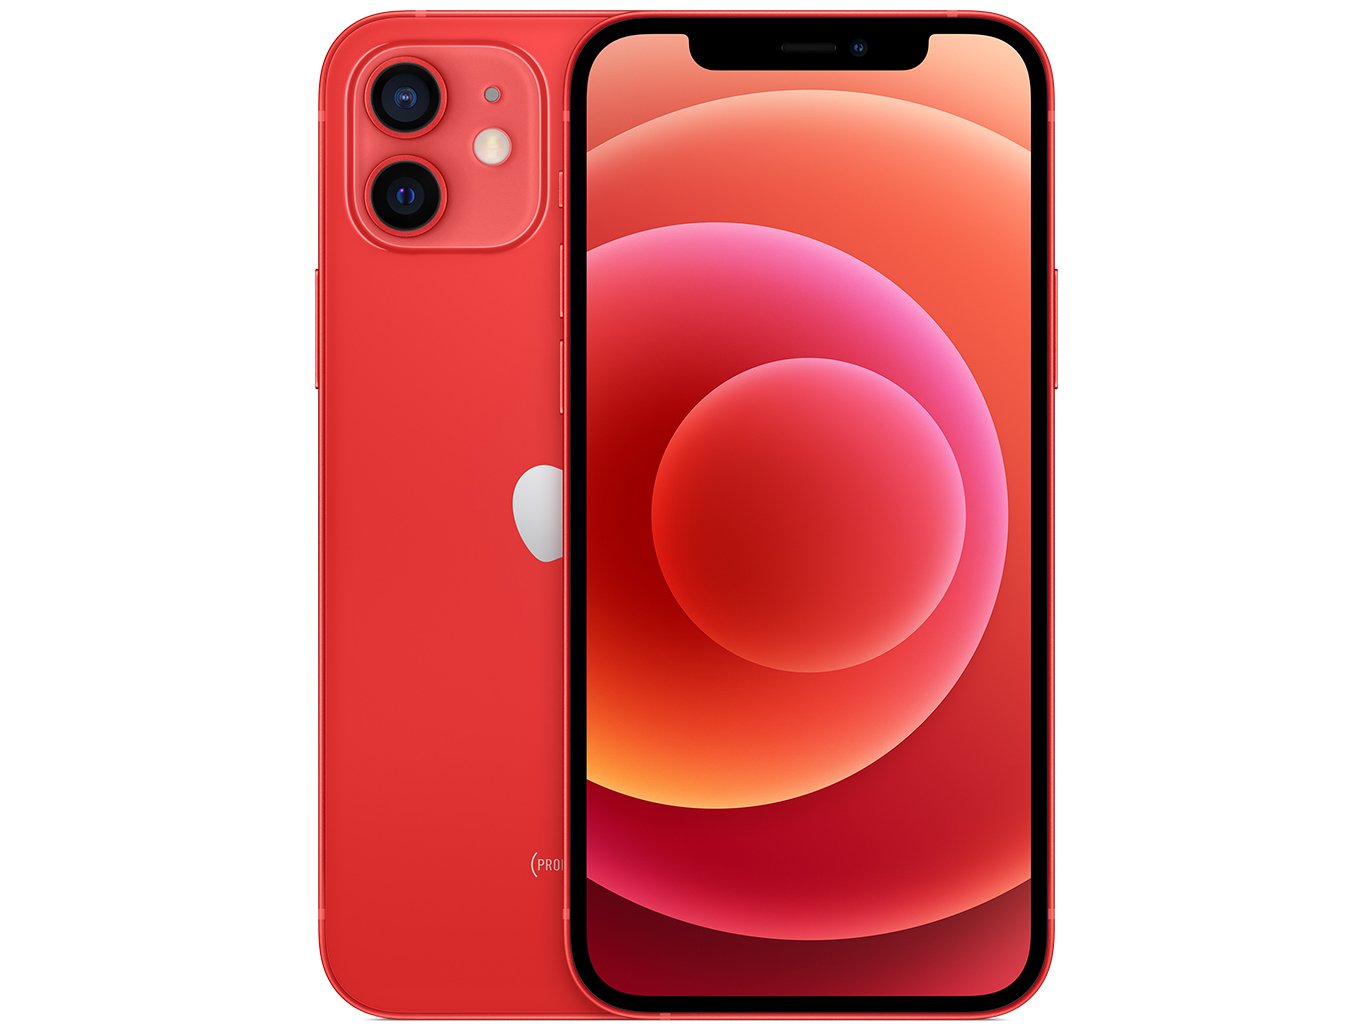 iPhone 12 Apple 128GB PRODUCT(RED) Tela de 6,1”, Câmera Dupla de 12MP, iOS